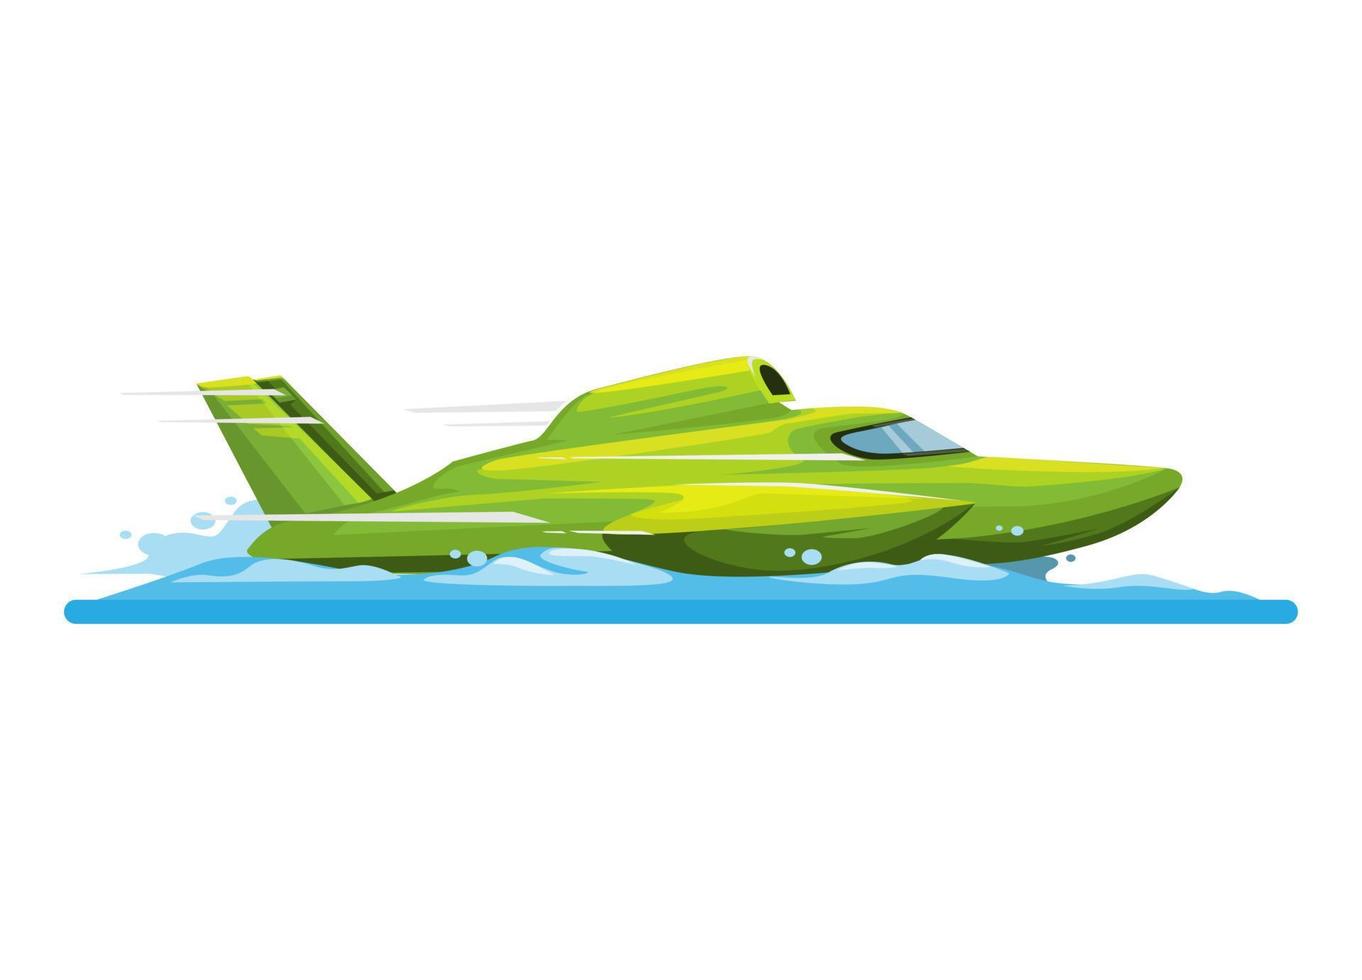 hidroavión barco carreras motos acuáticas vista lateral mascota dibujos animados ilustración vector